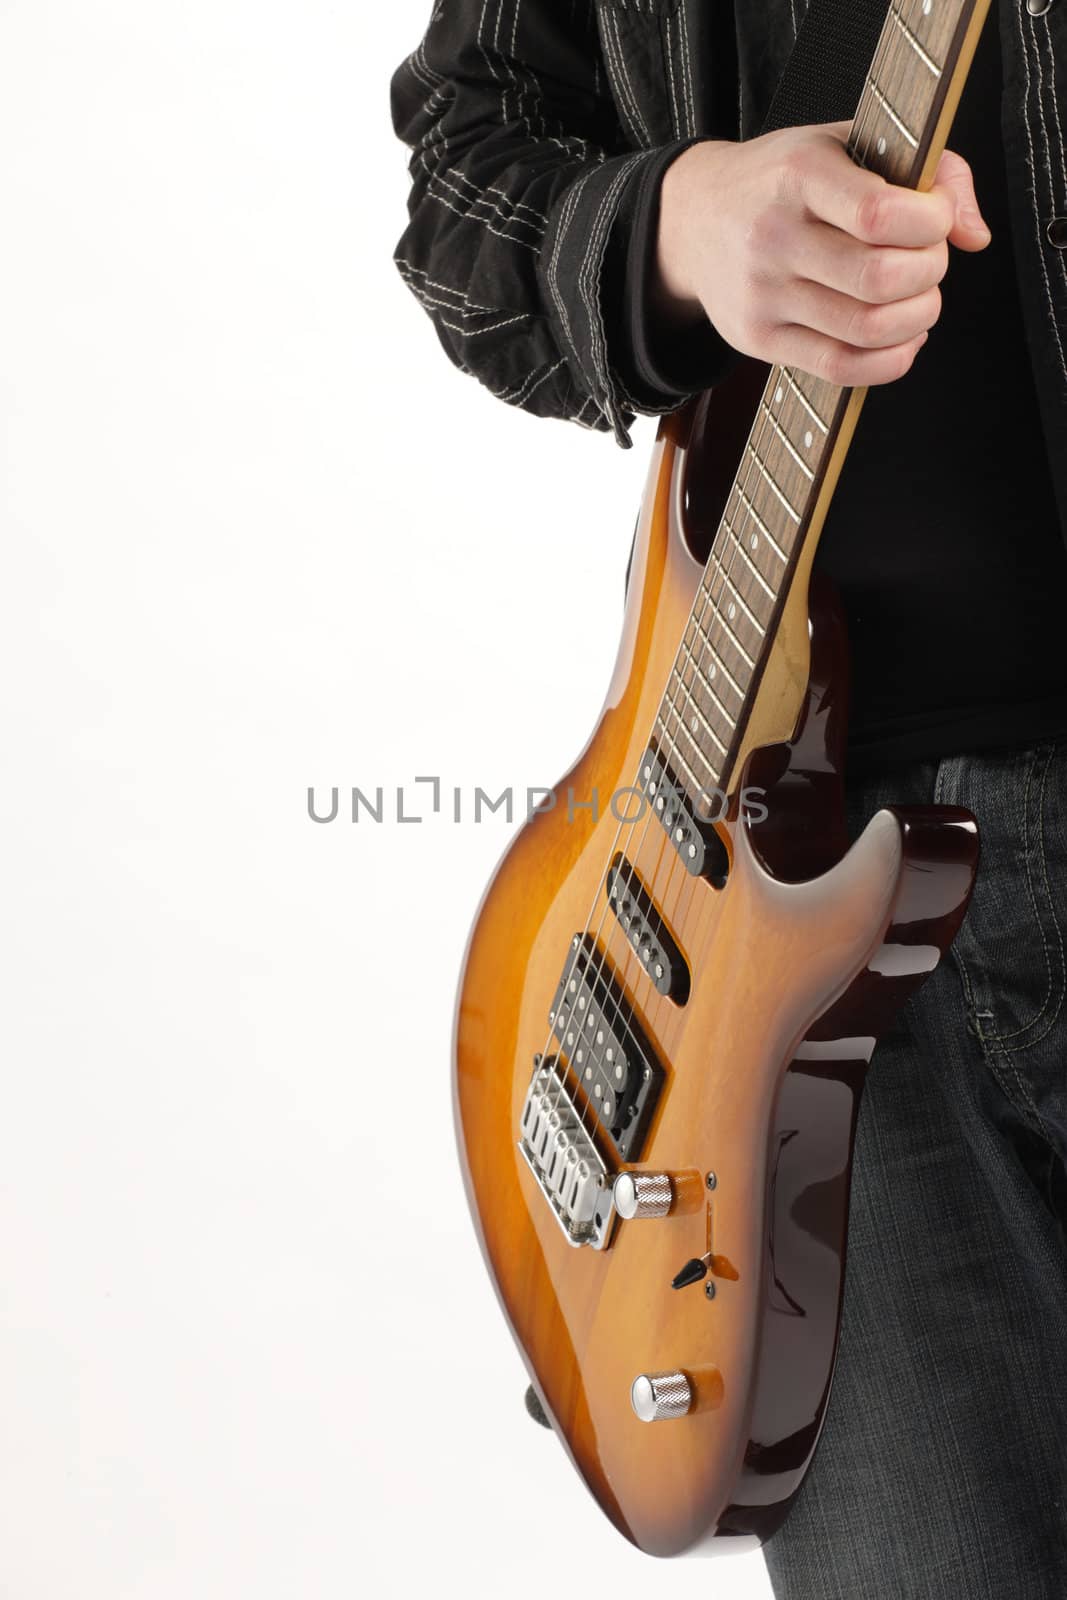 guitarist rock star  on white background